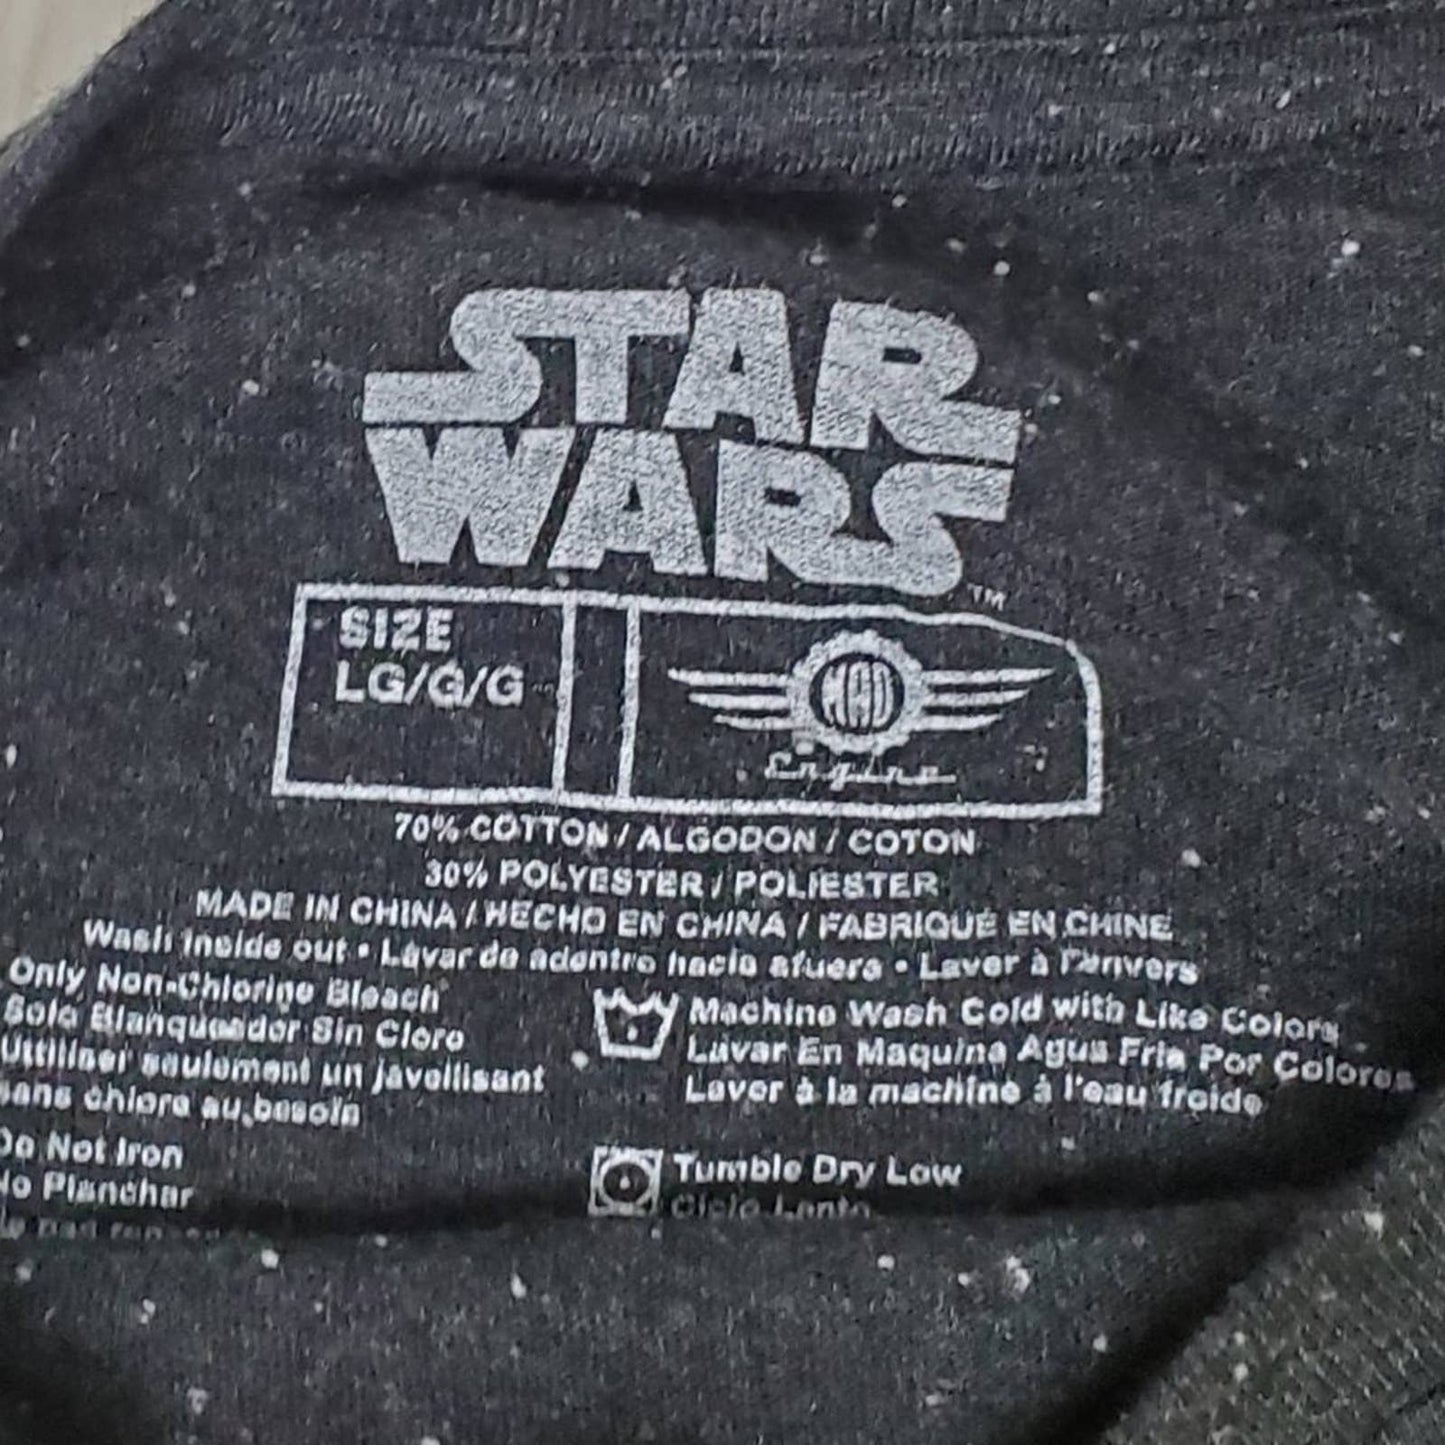 Star Wars The Empire Strikes Back T-Shirt - L